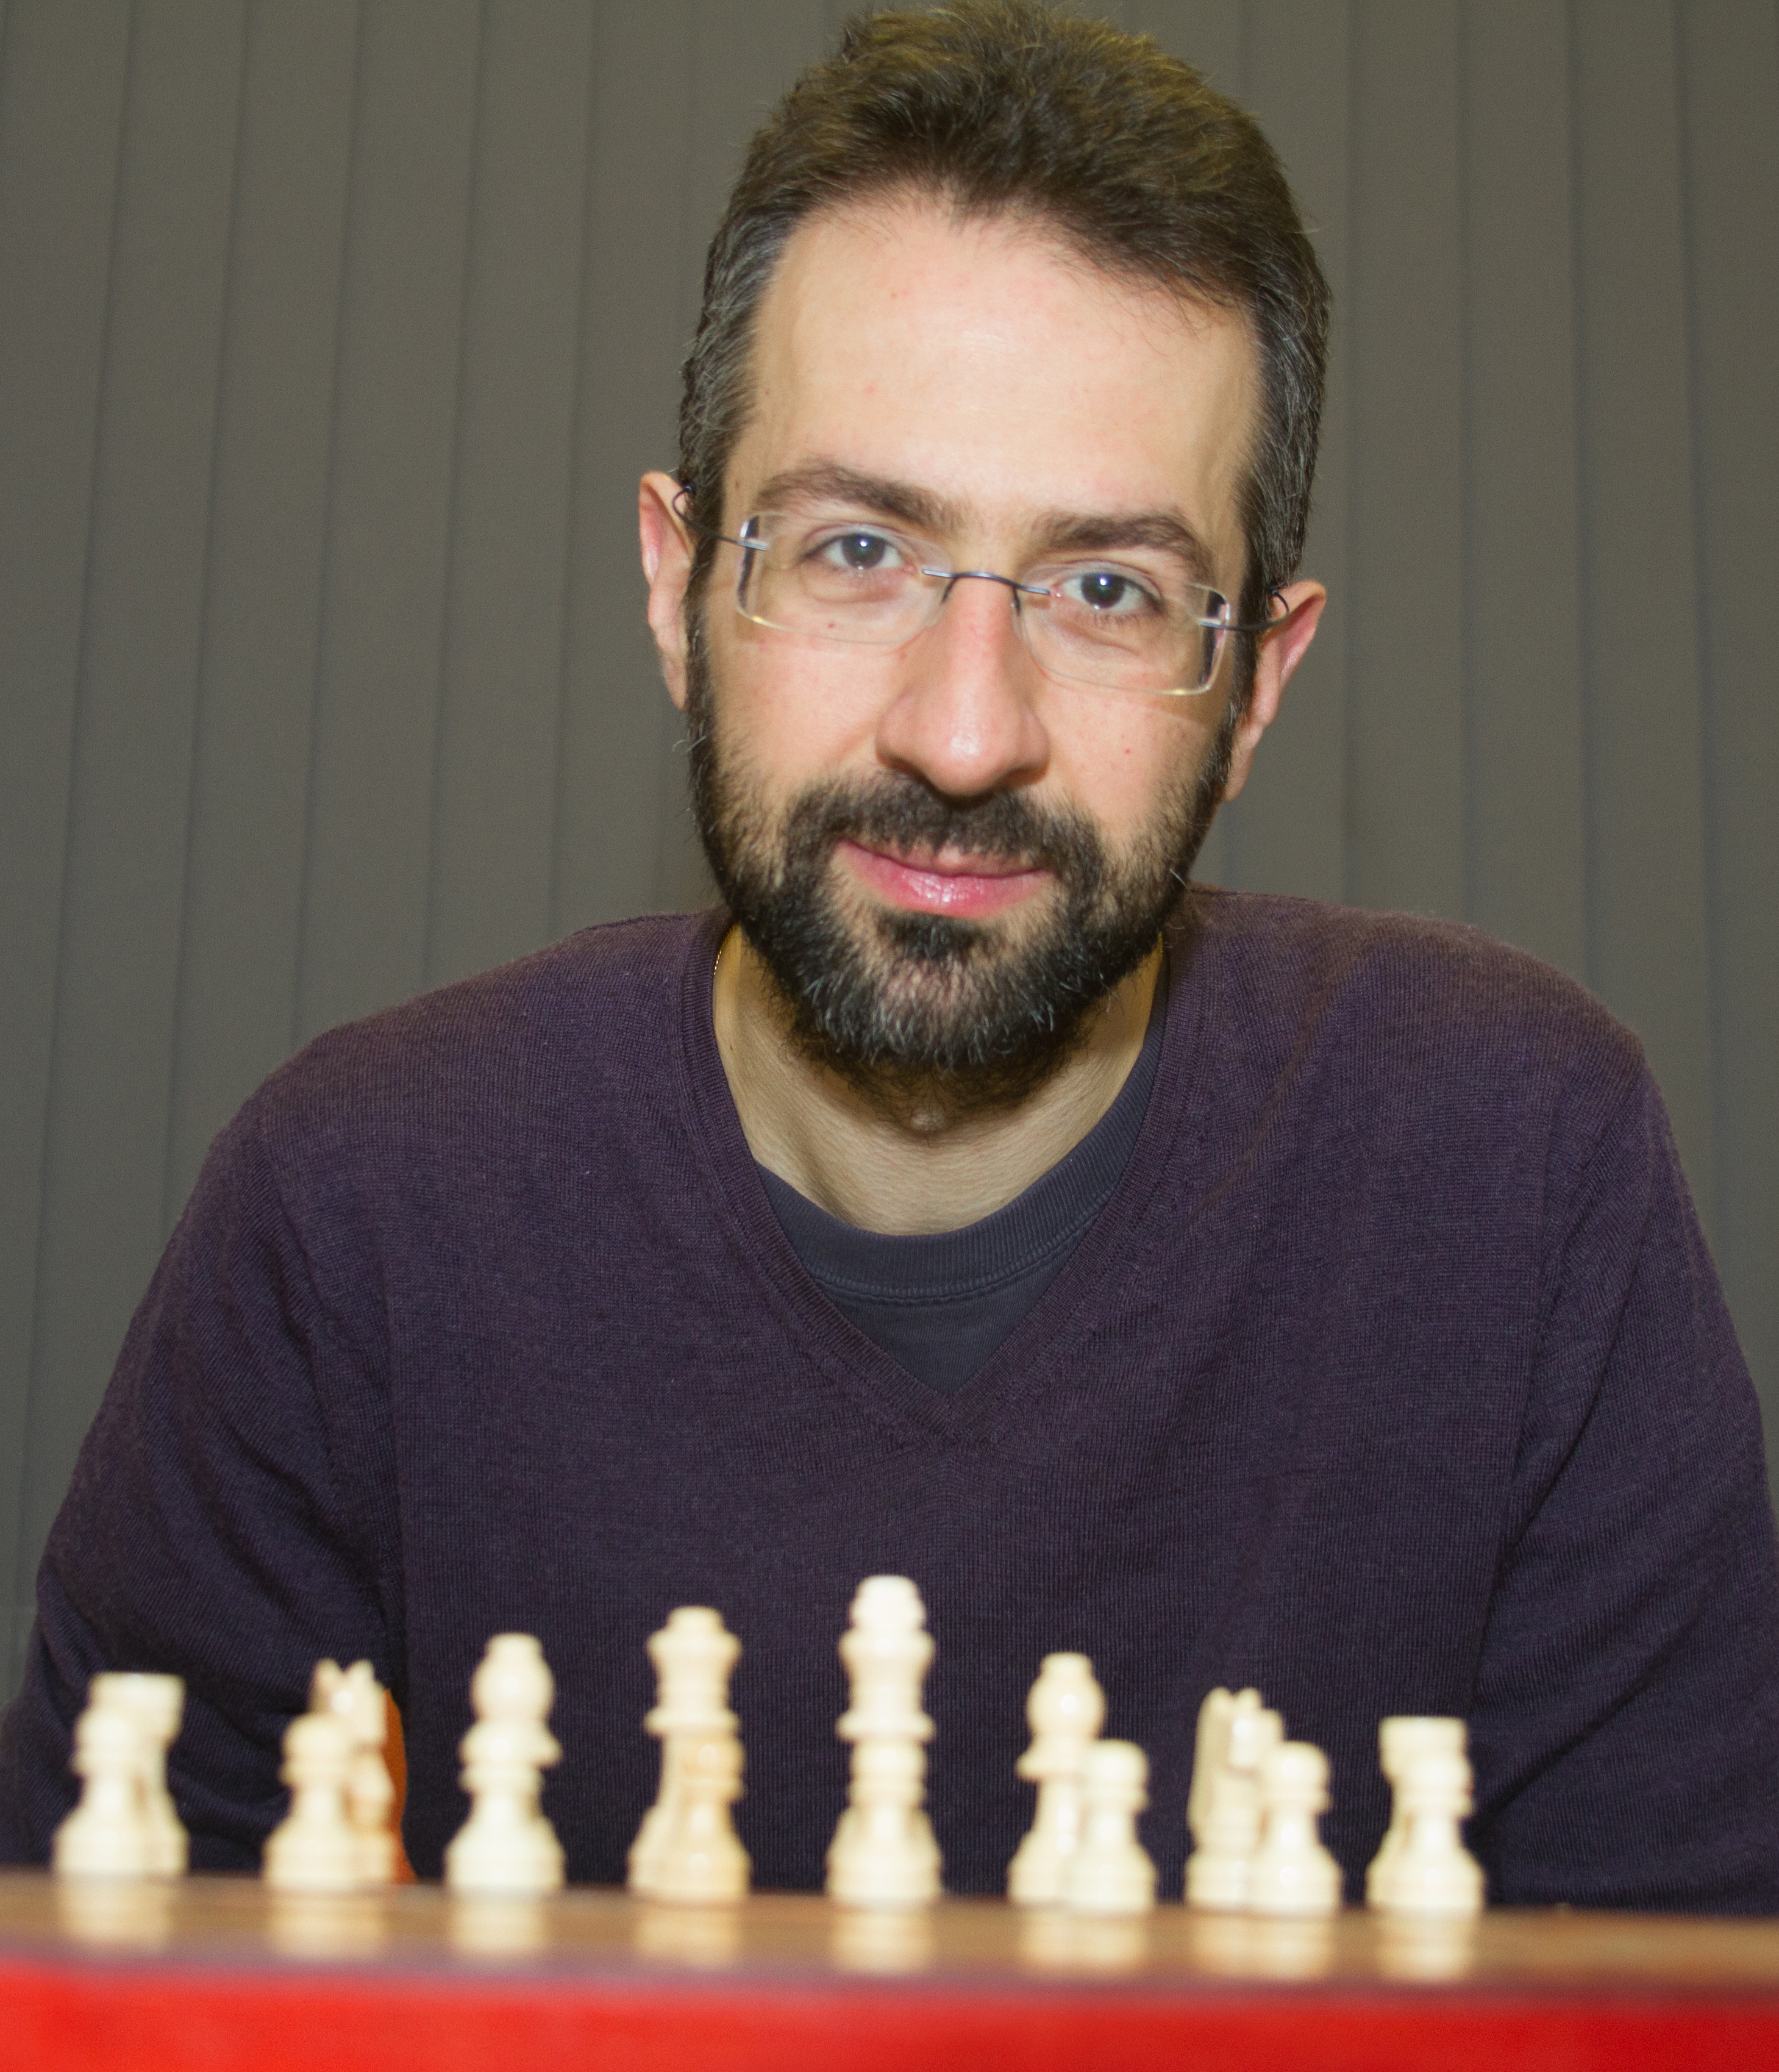 Dr Michalis Drouvelis at a chess board